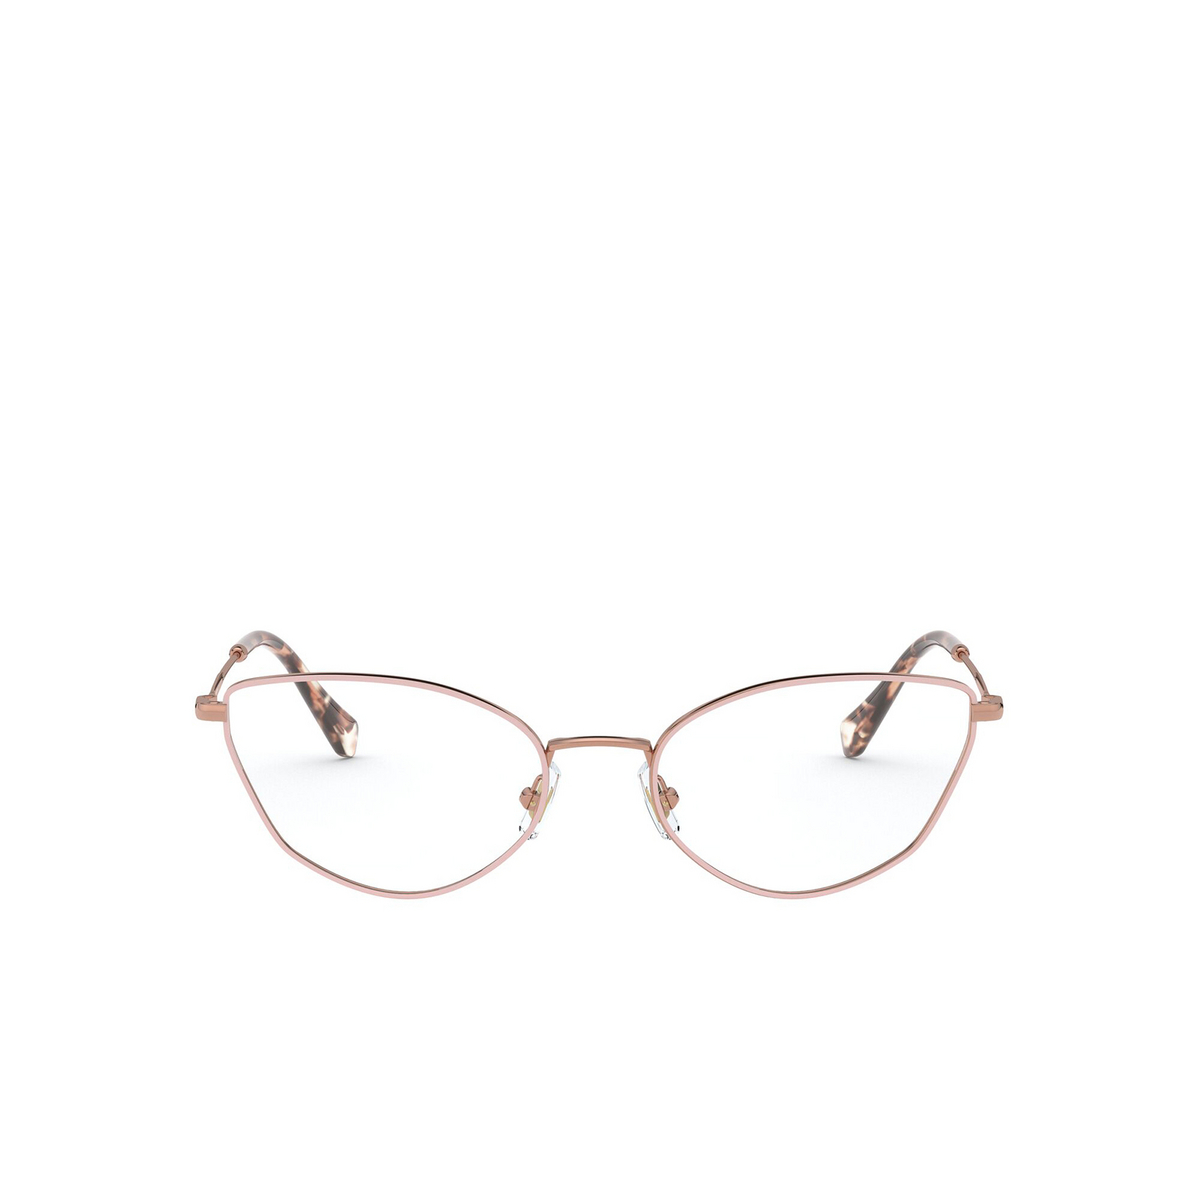 Miu Miu® Cat-eye Eyeglasses: MU 51SV color Pink Gold / Powder YEP1O1 - front view.